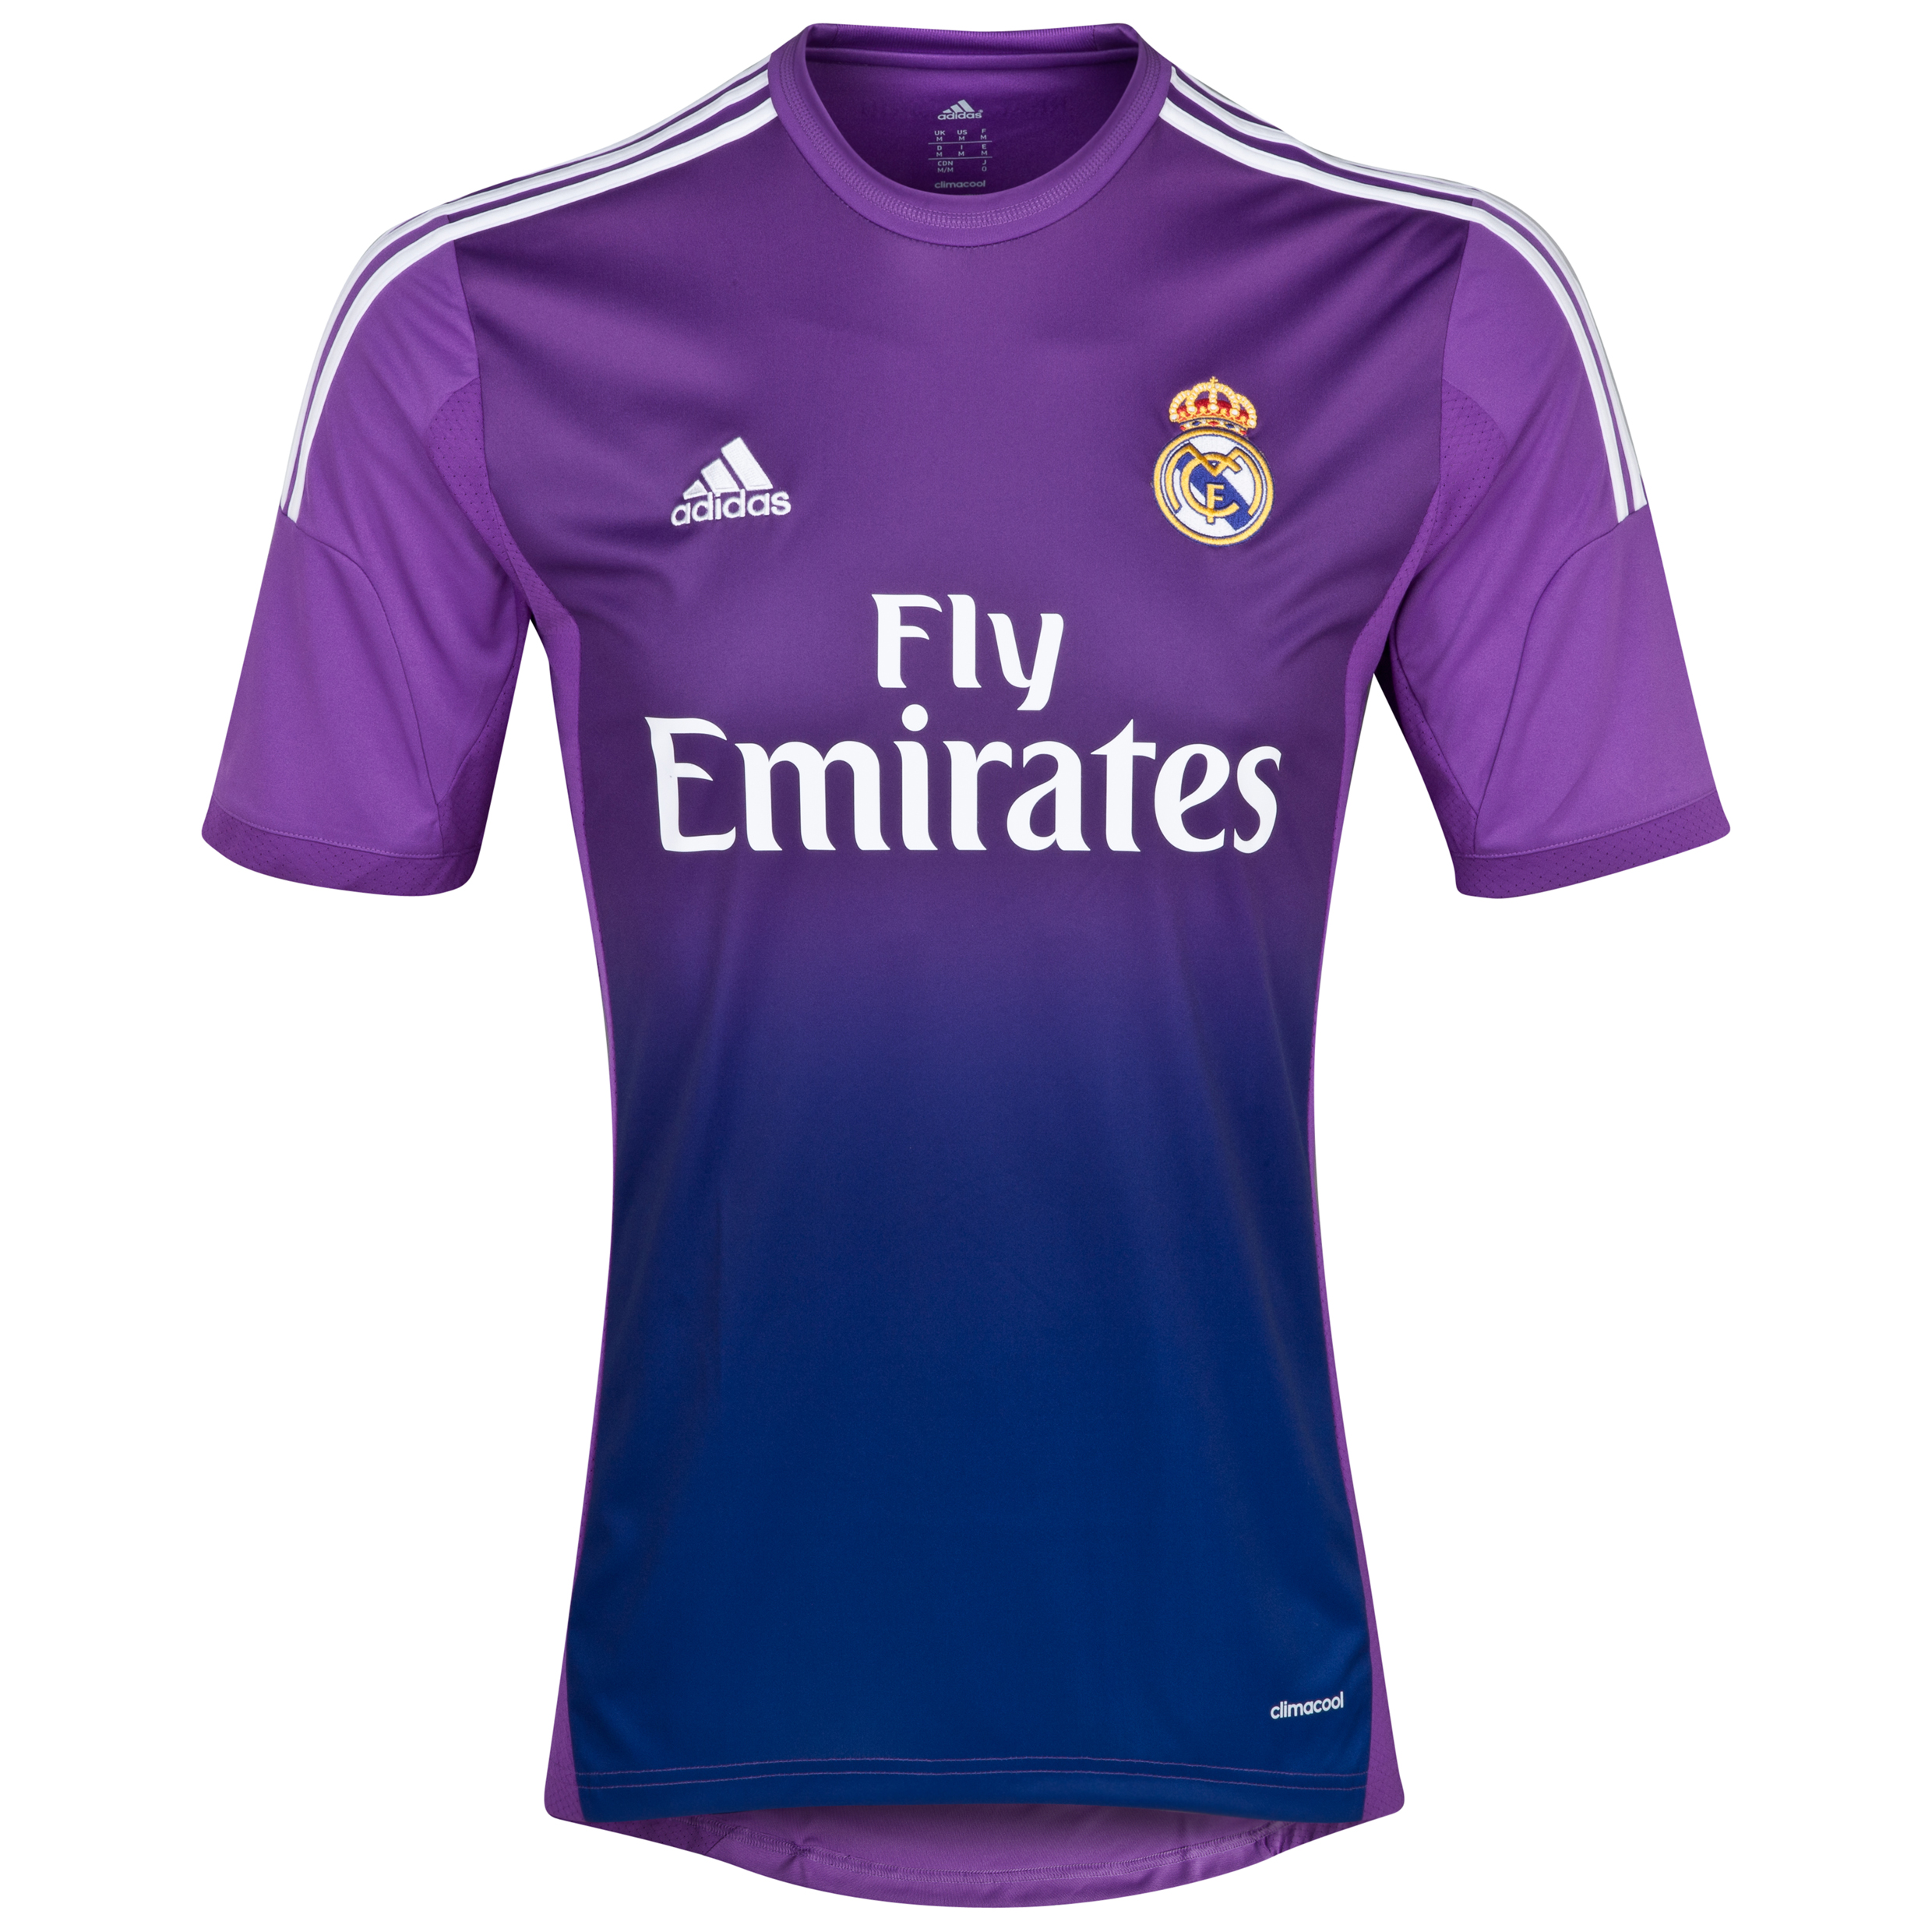 Real Madrid Home Goalkeeper Shirt 2013/14